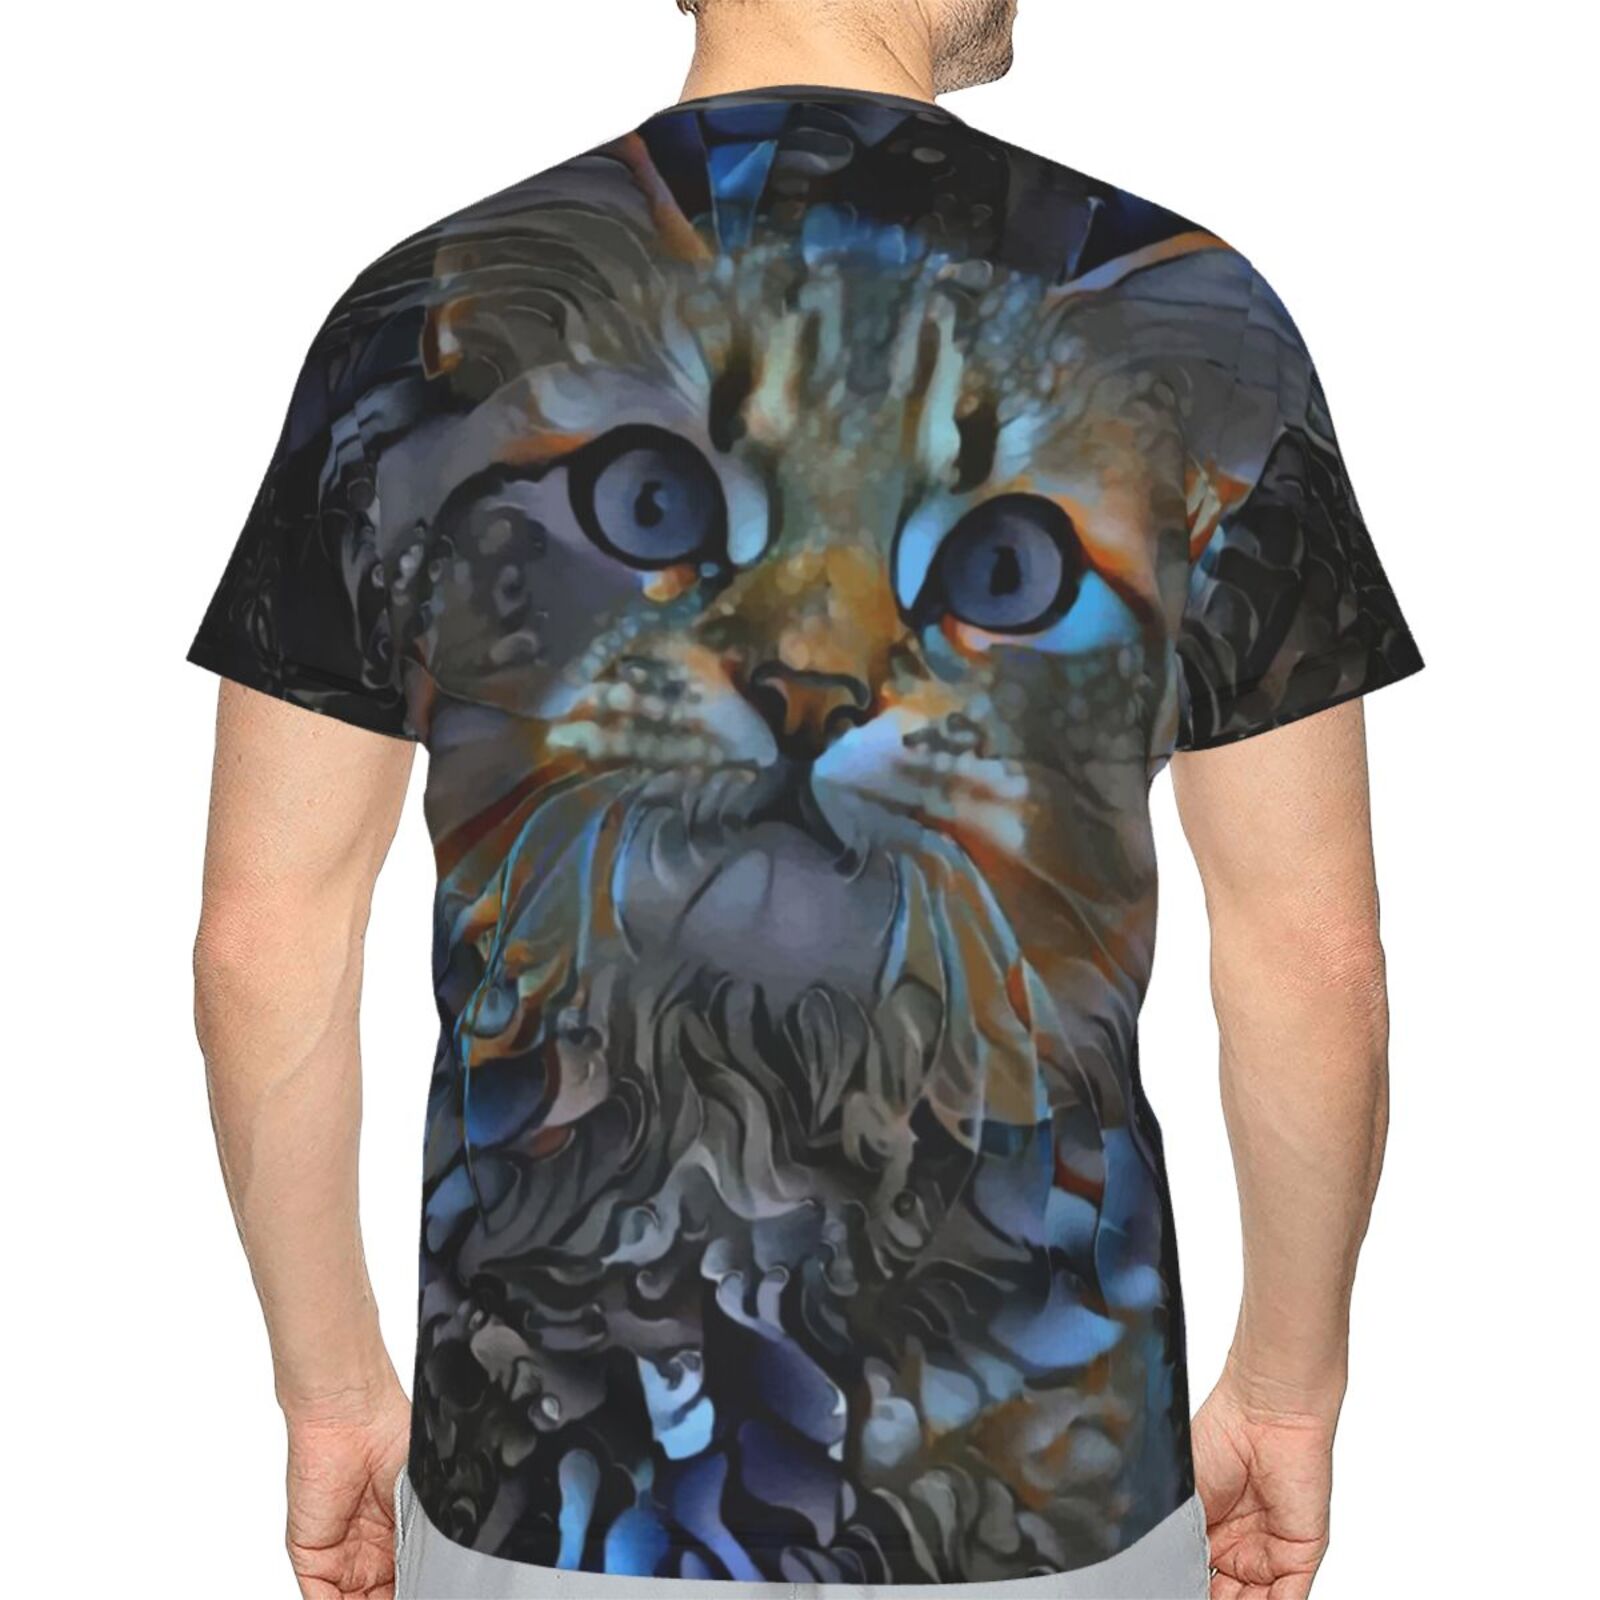 Leyris Cat Mix Mdeia Elements Classic T-shirt